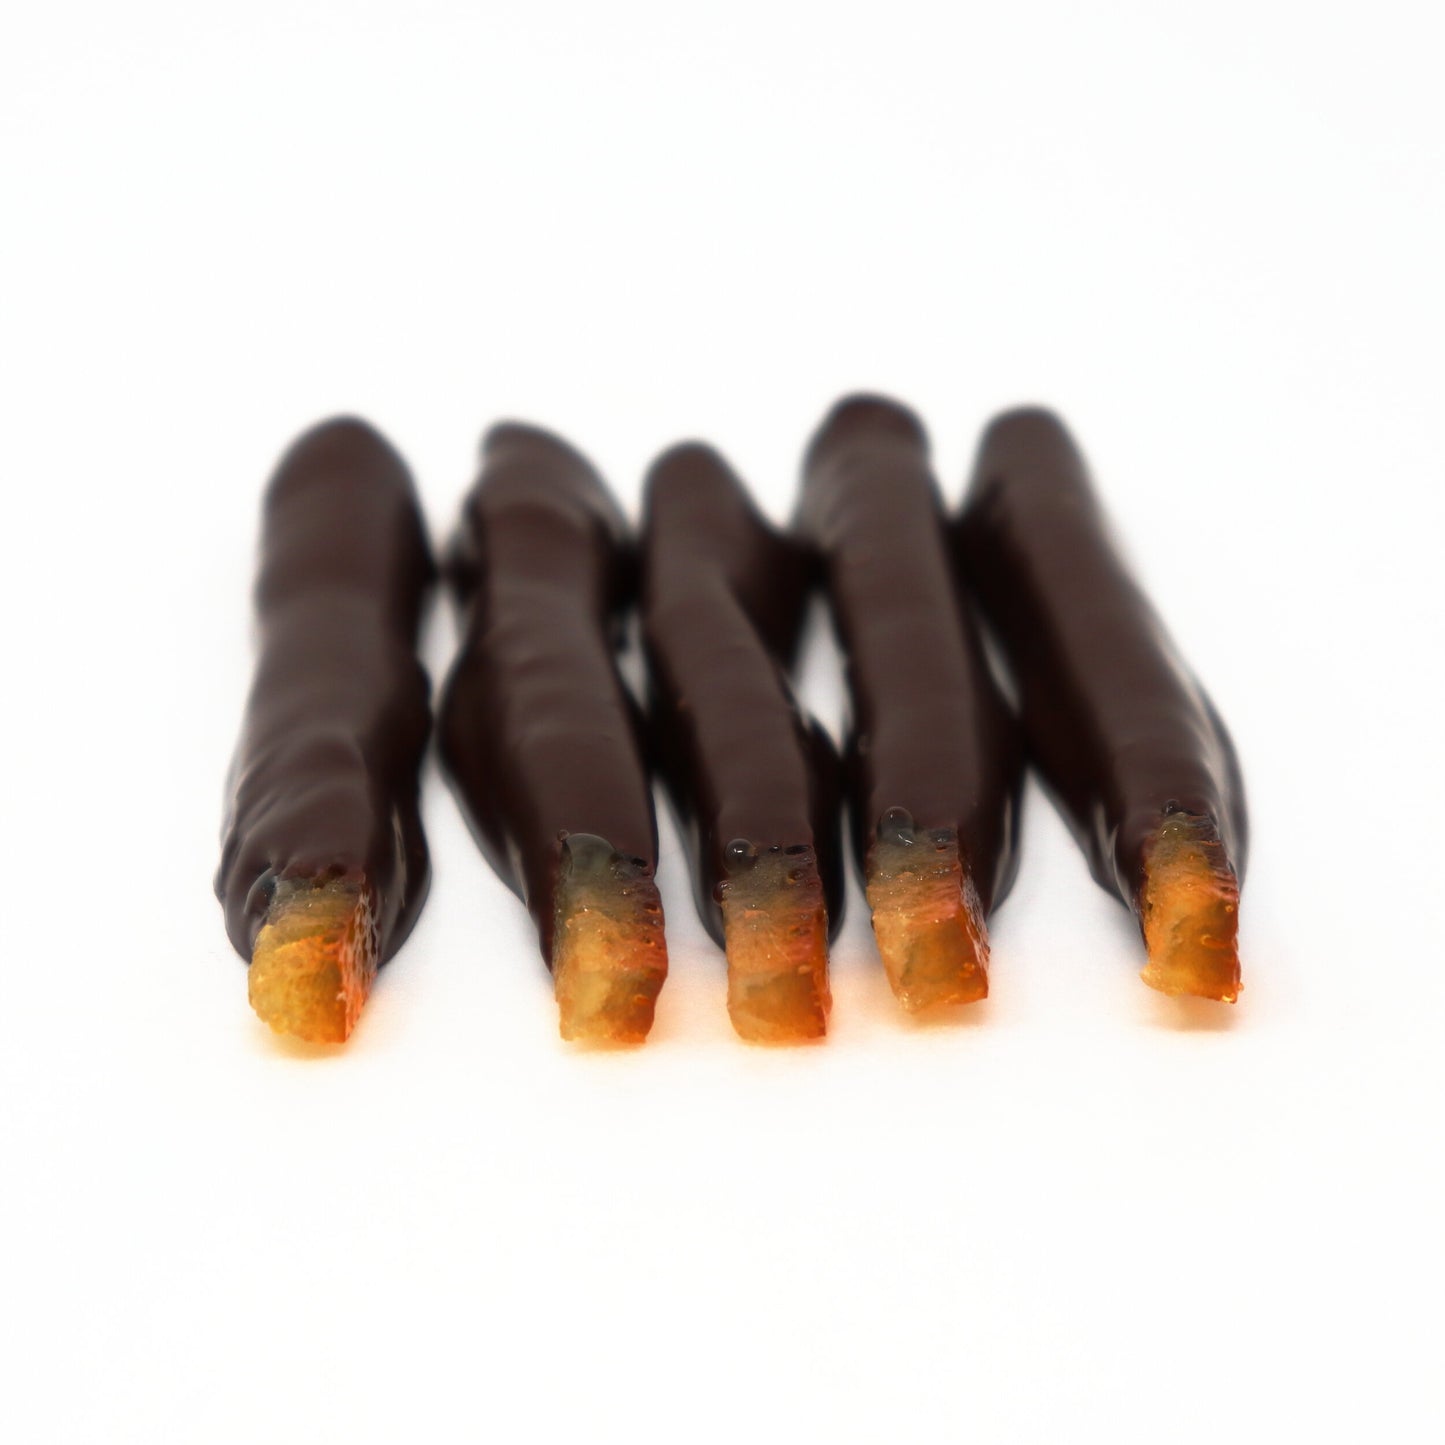 Orange Peel Coated in Dark Chocolate - Anna Stubbe